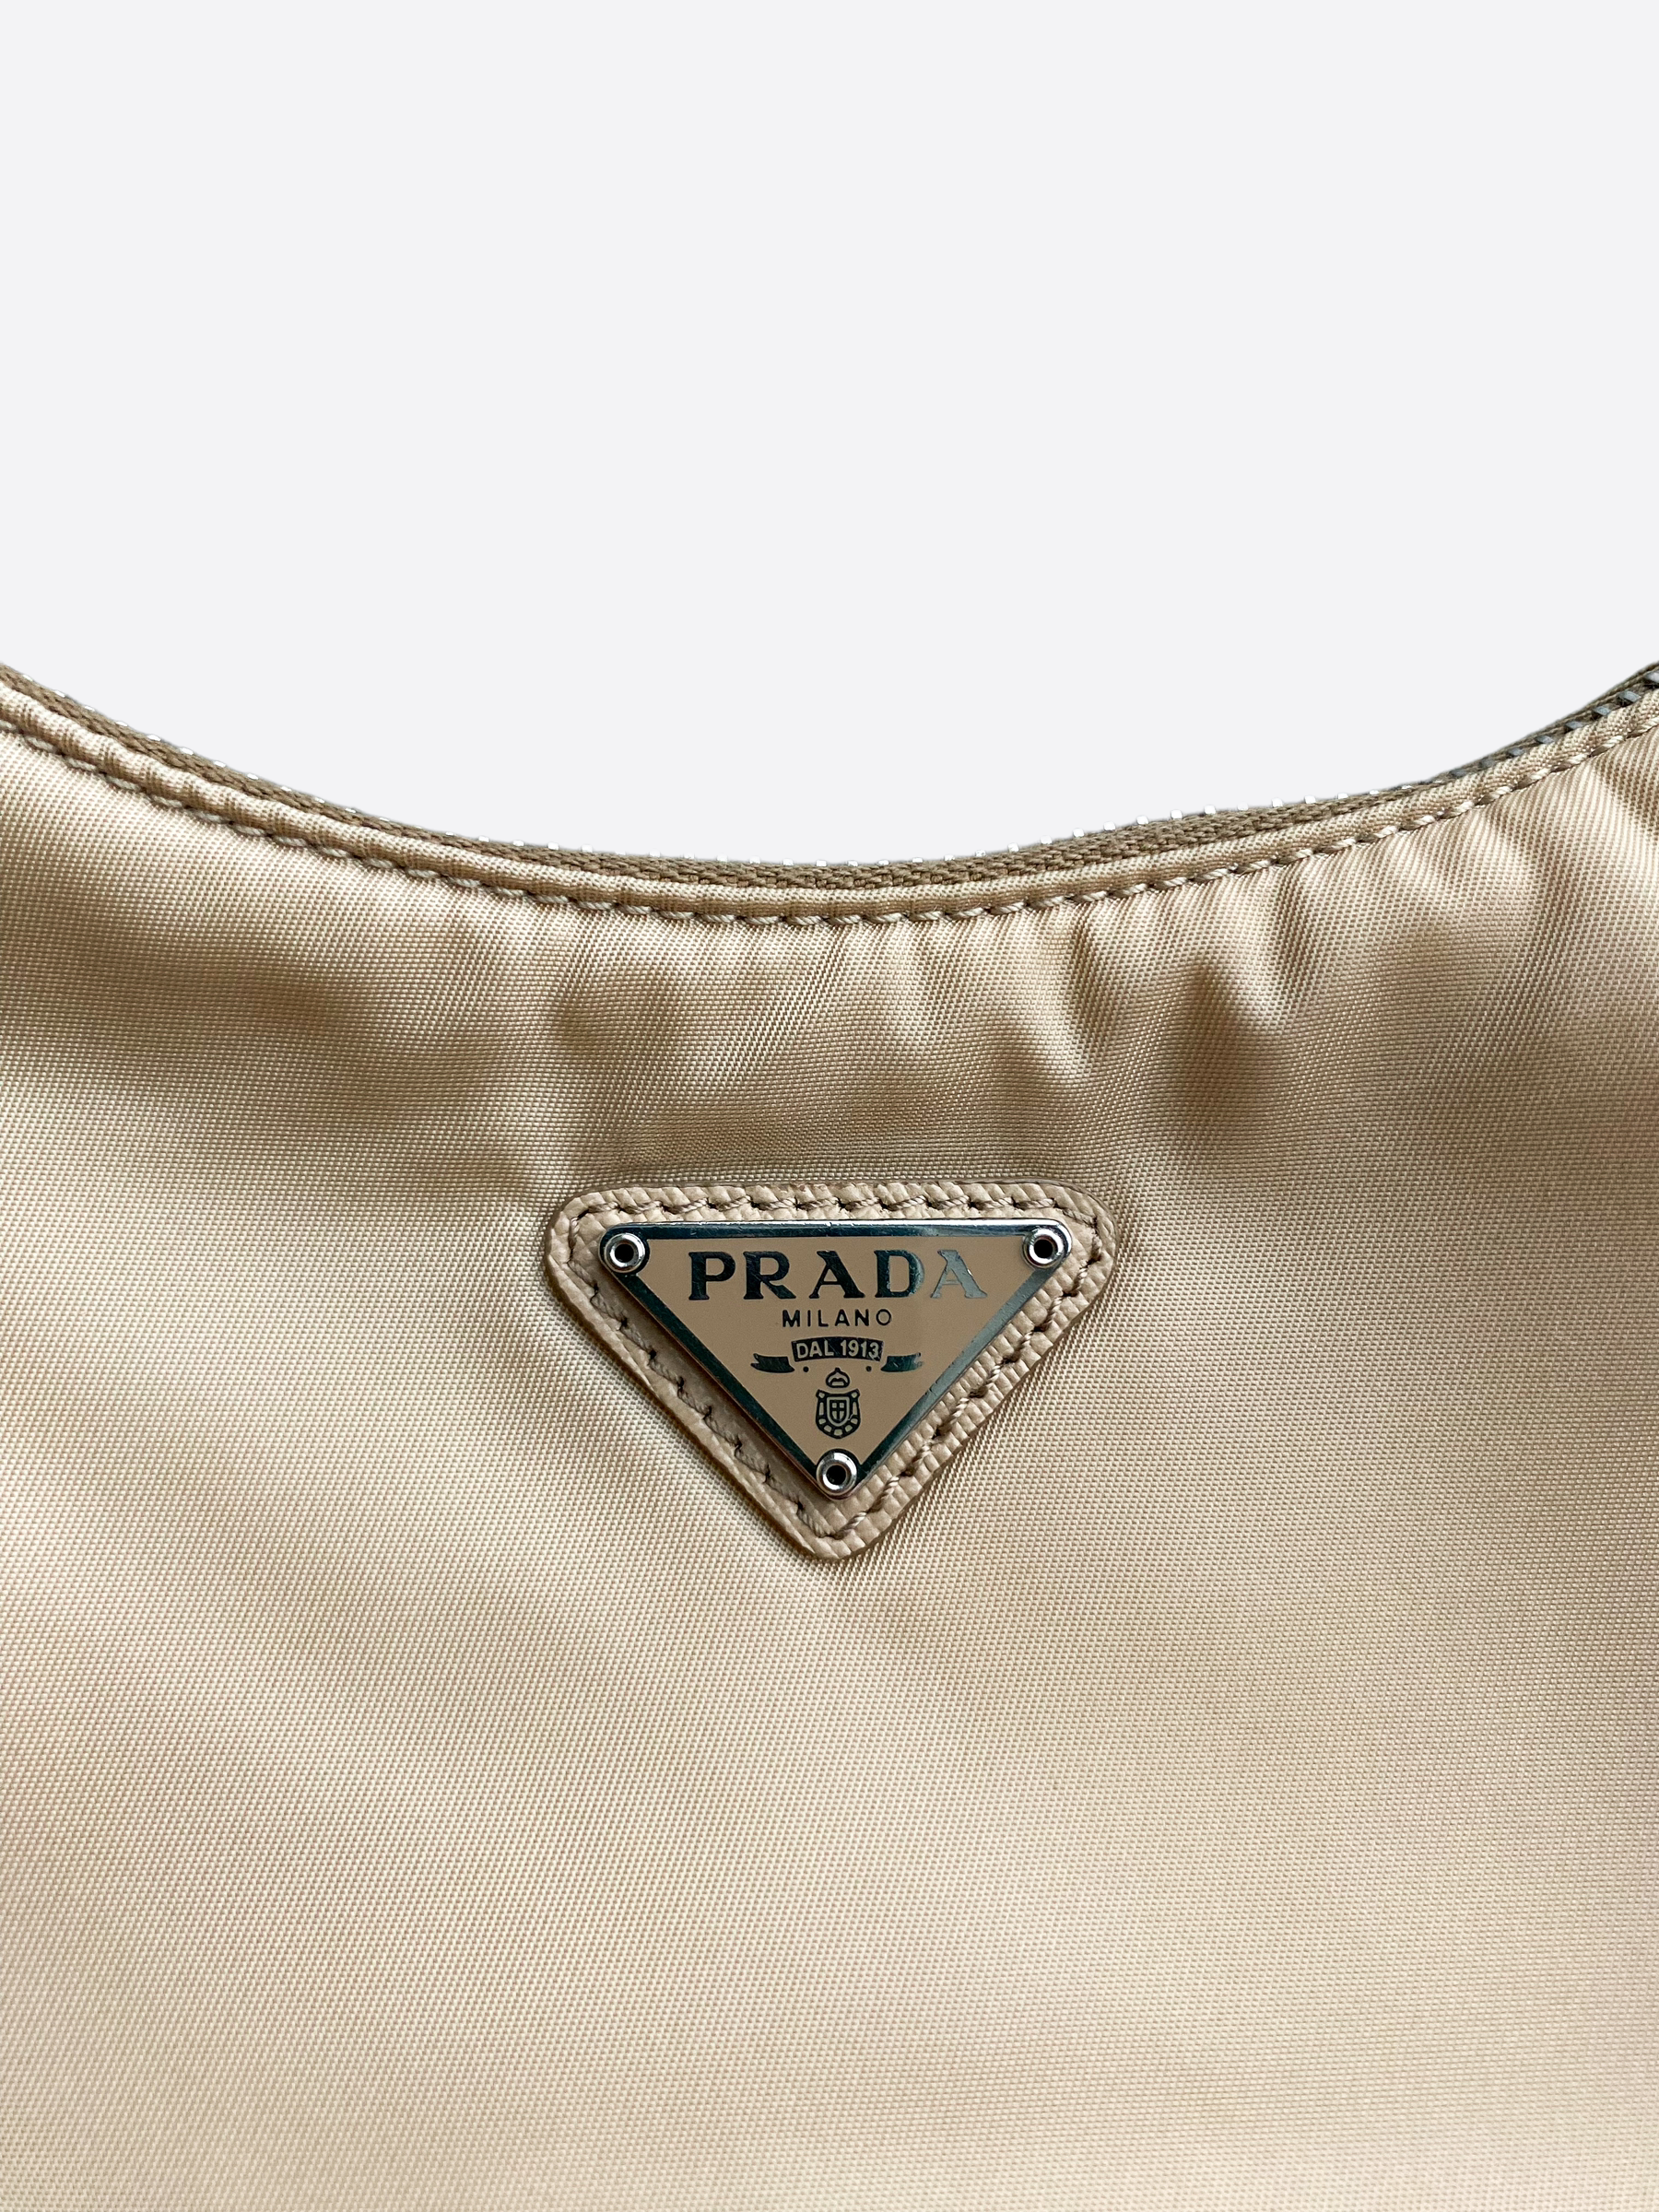 Padded Re-Nylon Shoulder Bag Desert Beige 1BC151_RDJN, Beige, One Size